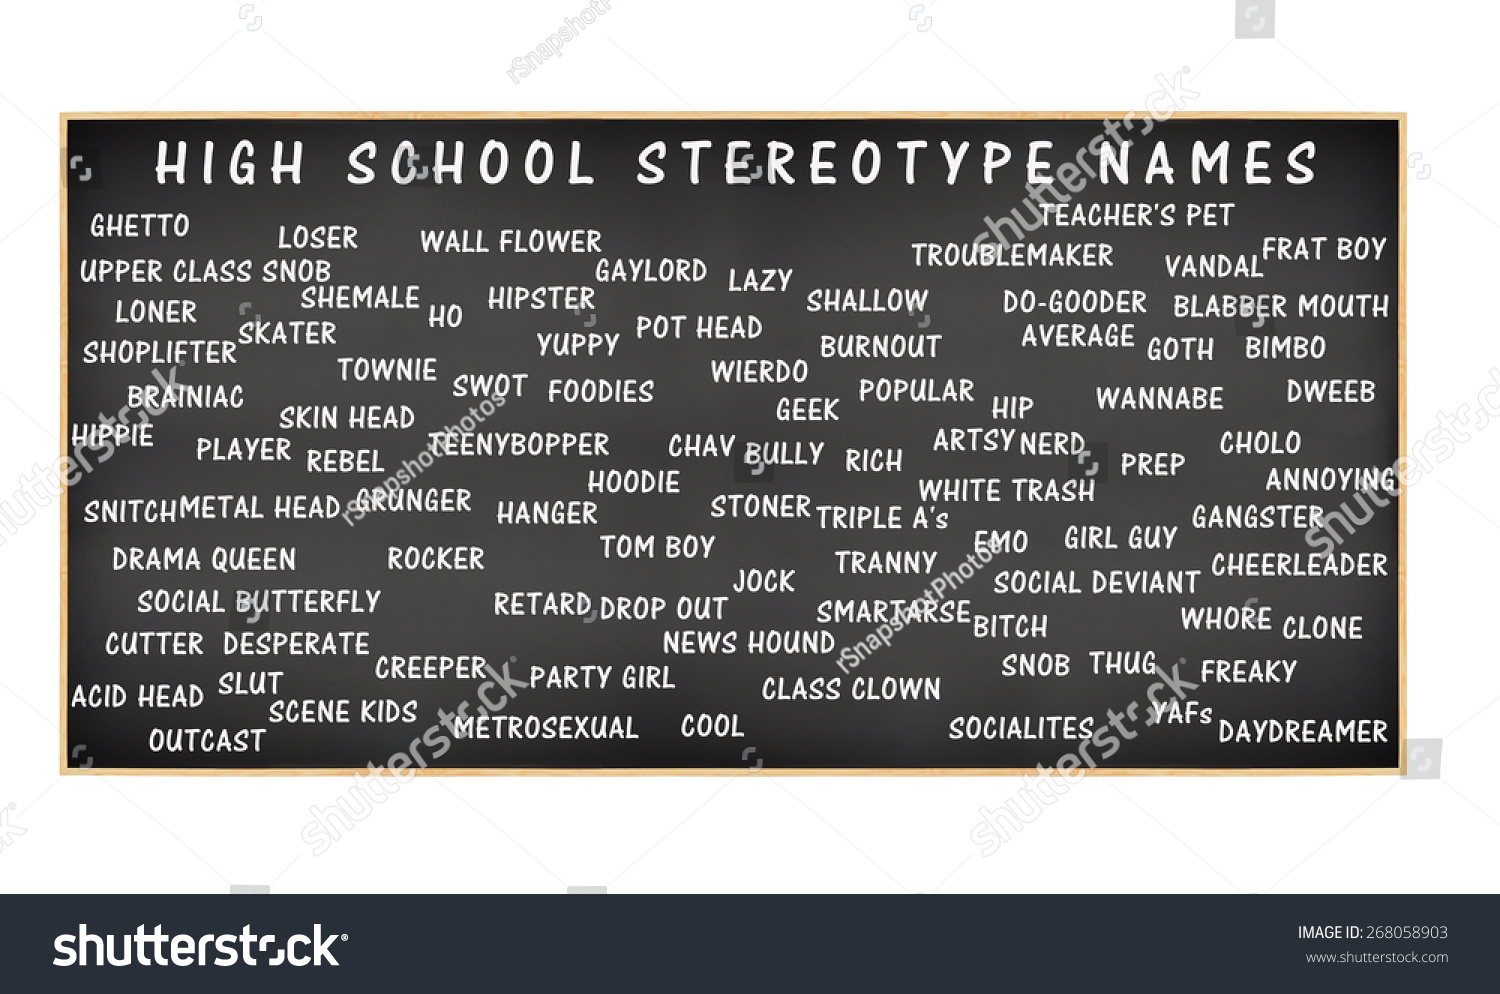 High school stereotypes